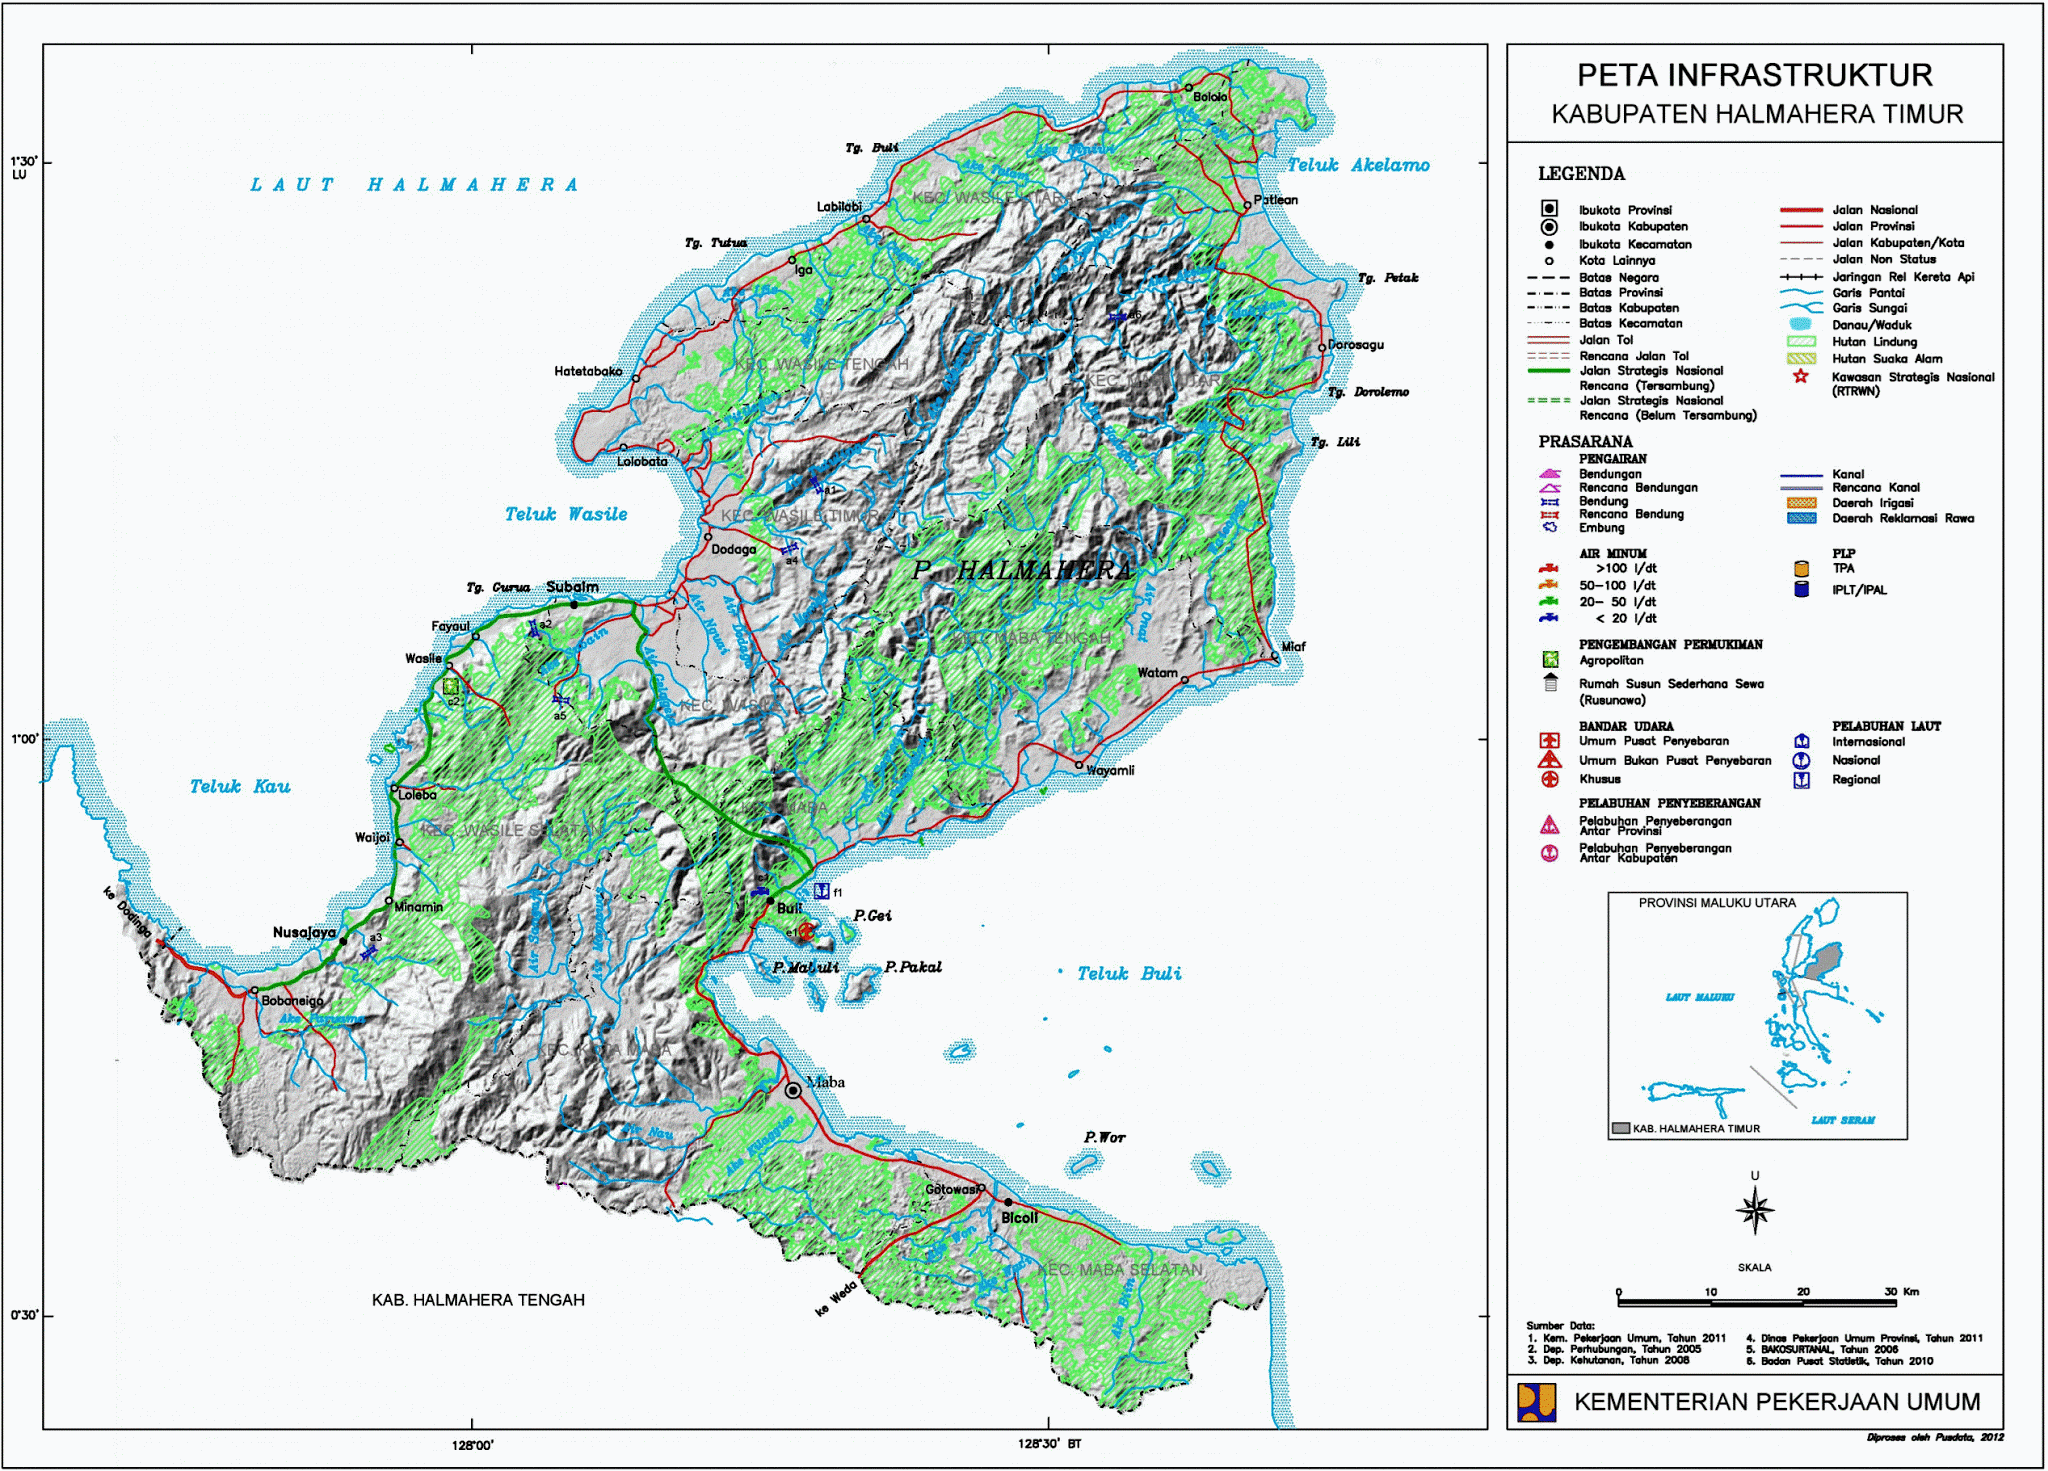 Peta Kota Peta Kabupaten Halmahera Timur